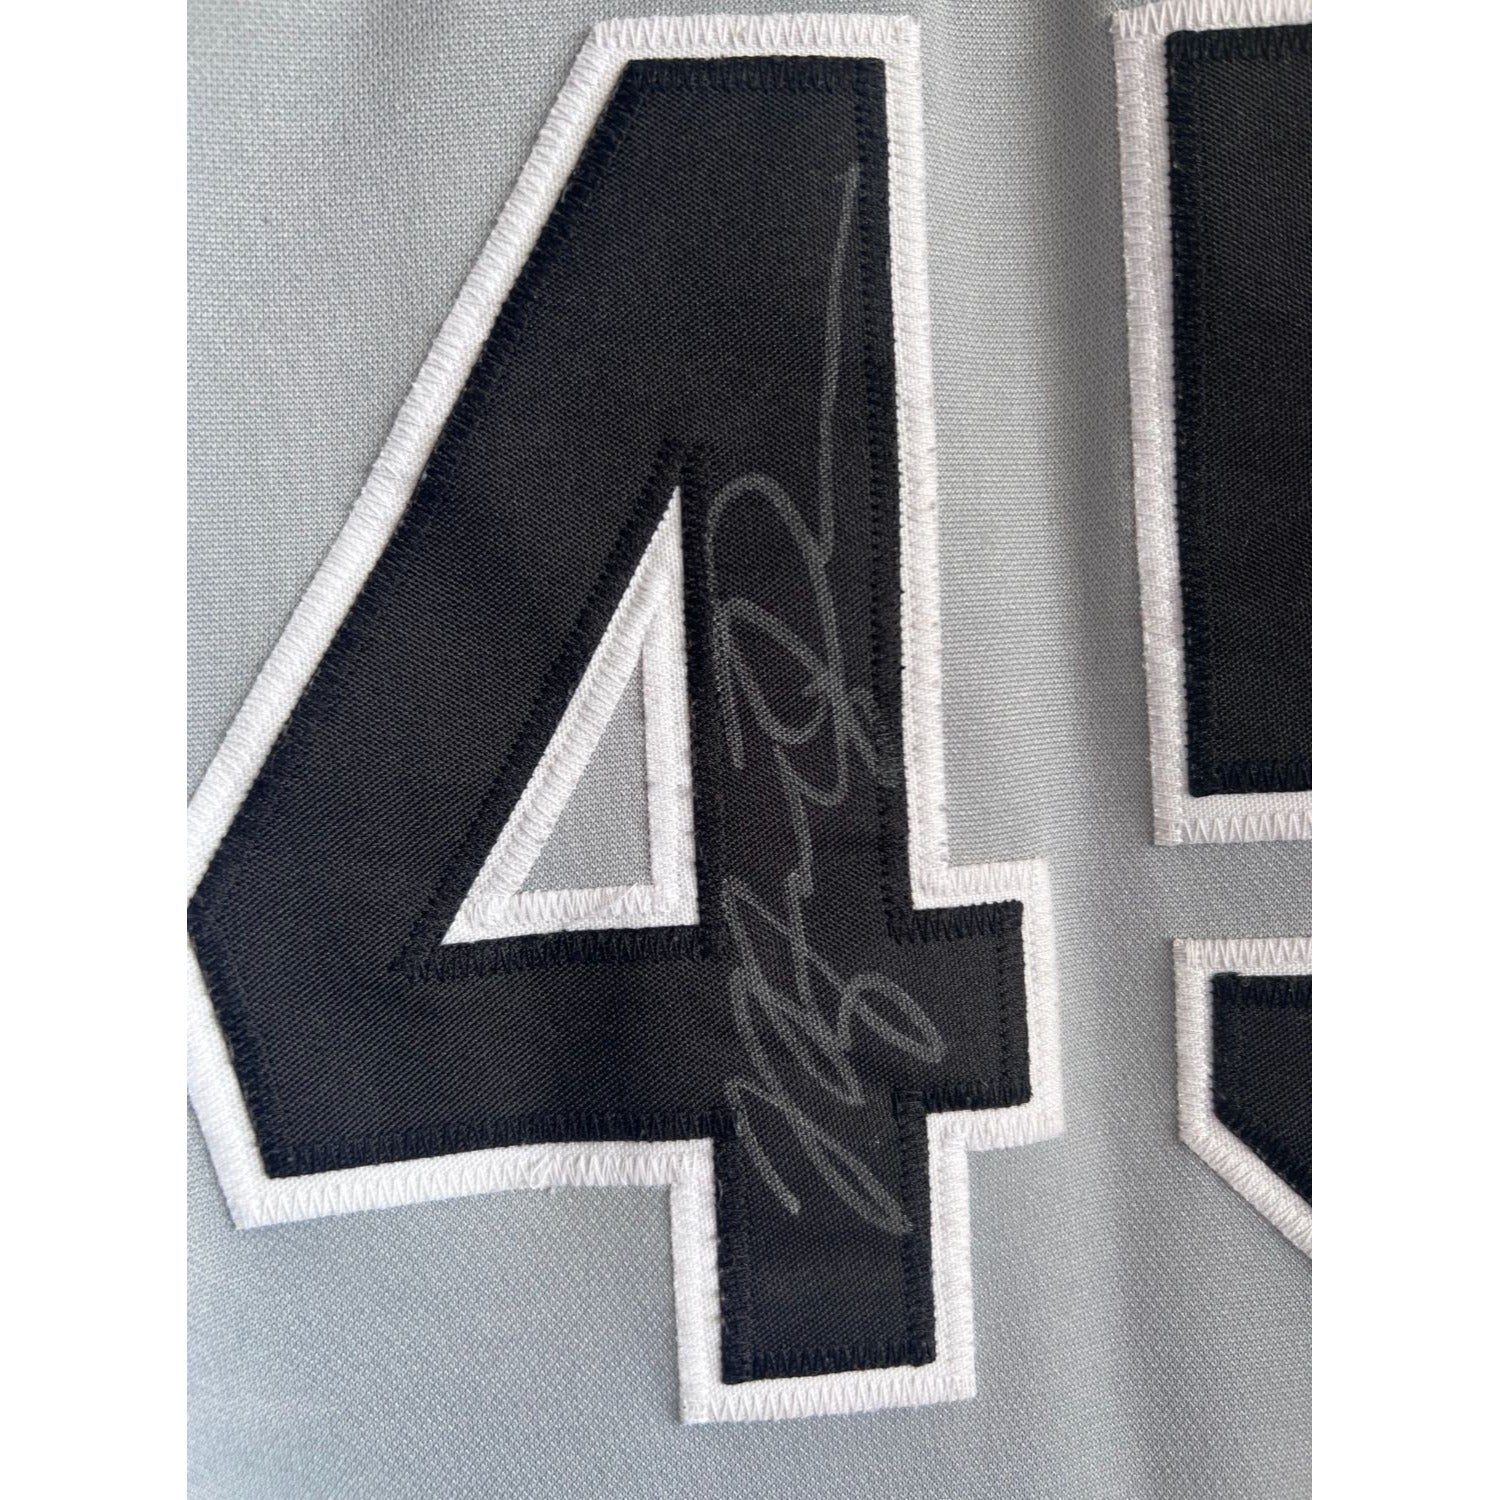 Michael Jordan Birmingham Barons signed jersey gray with proof